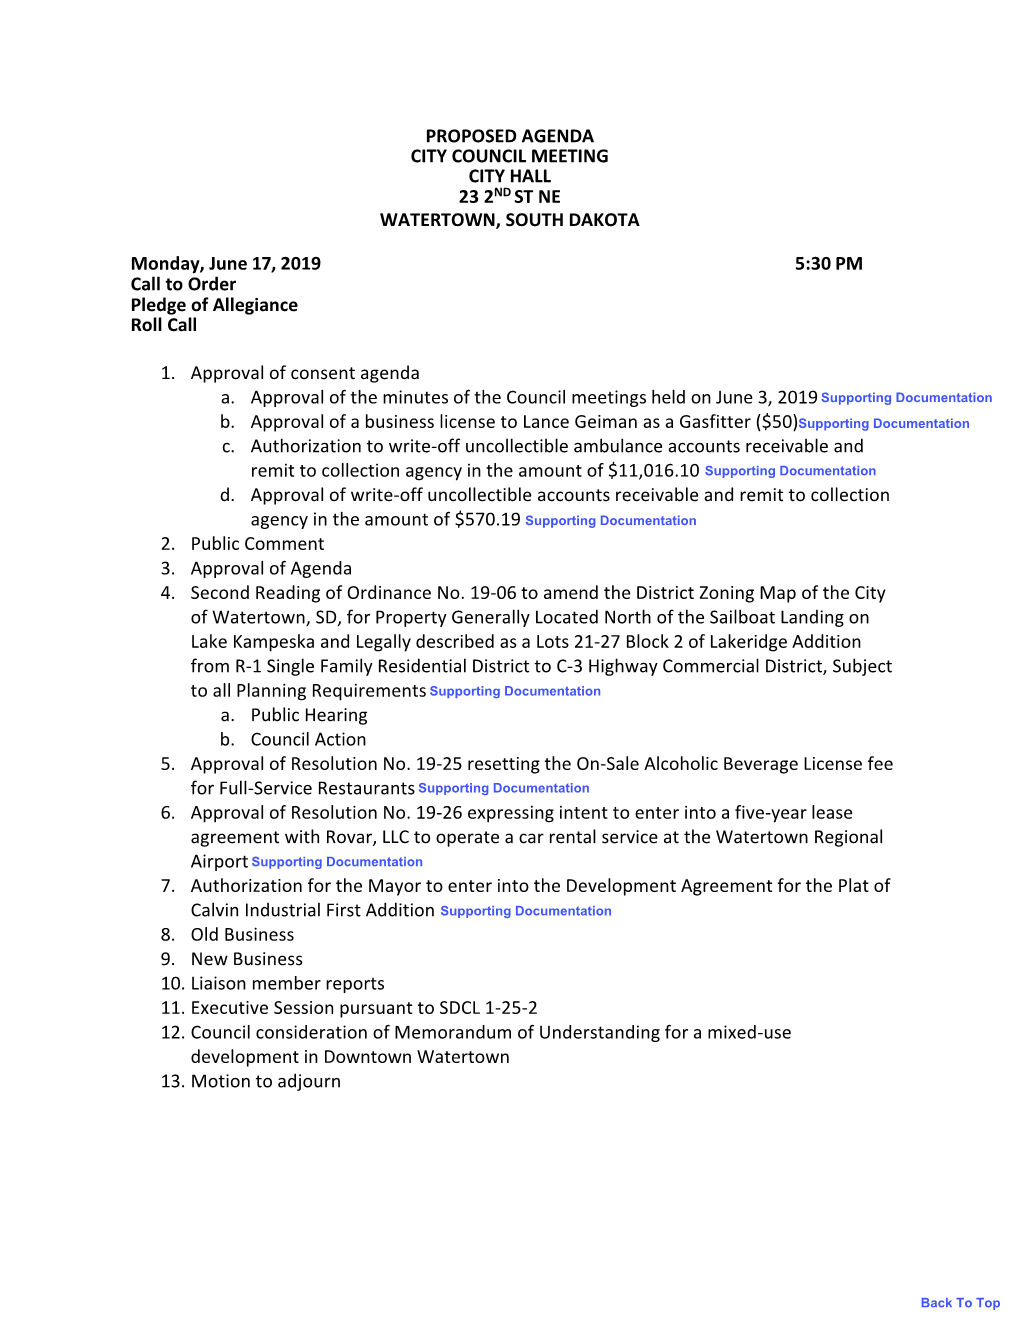 Proposed Agenda City Council Meeting City Hall 23 2Nd St Ne Watertown, South Dakota